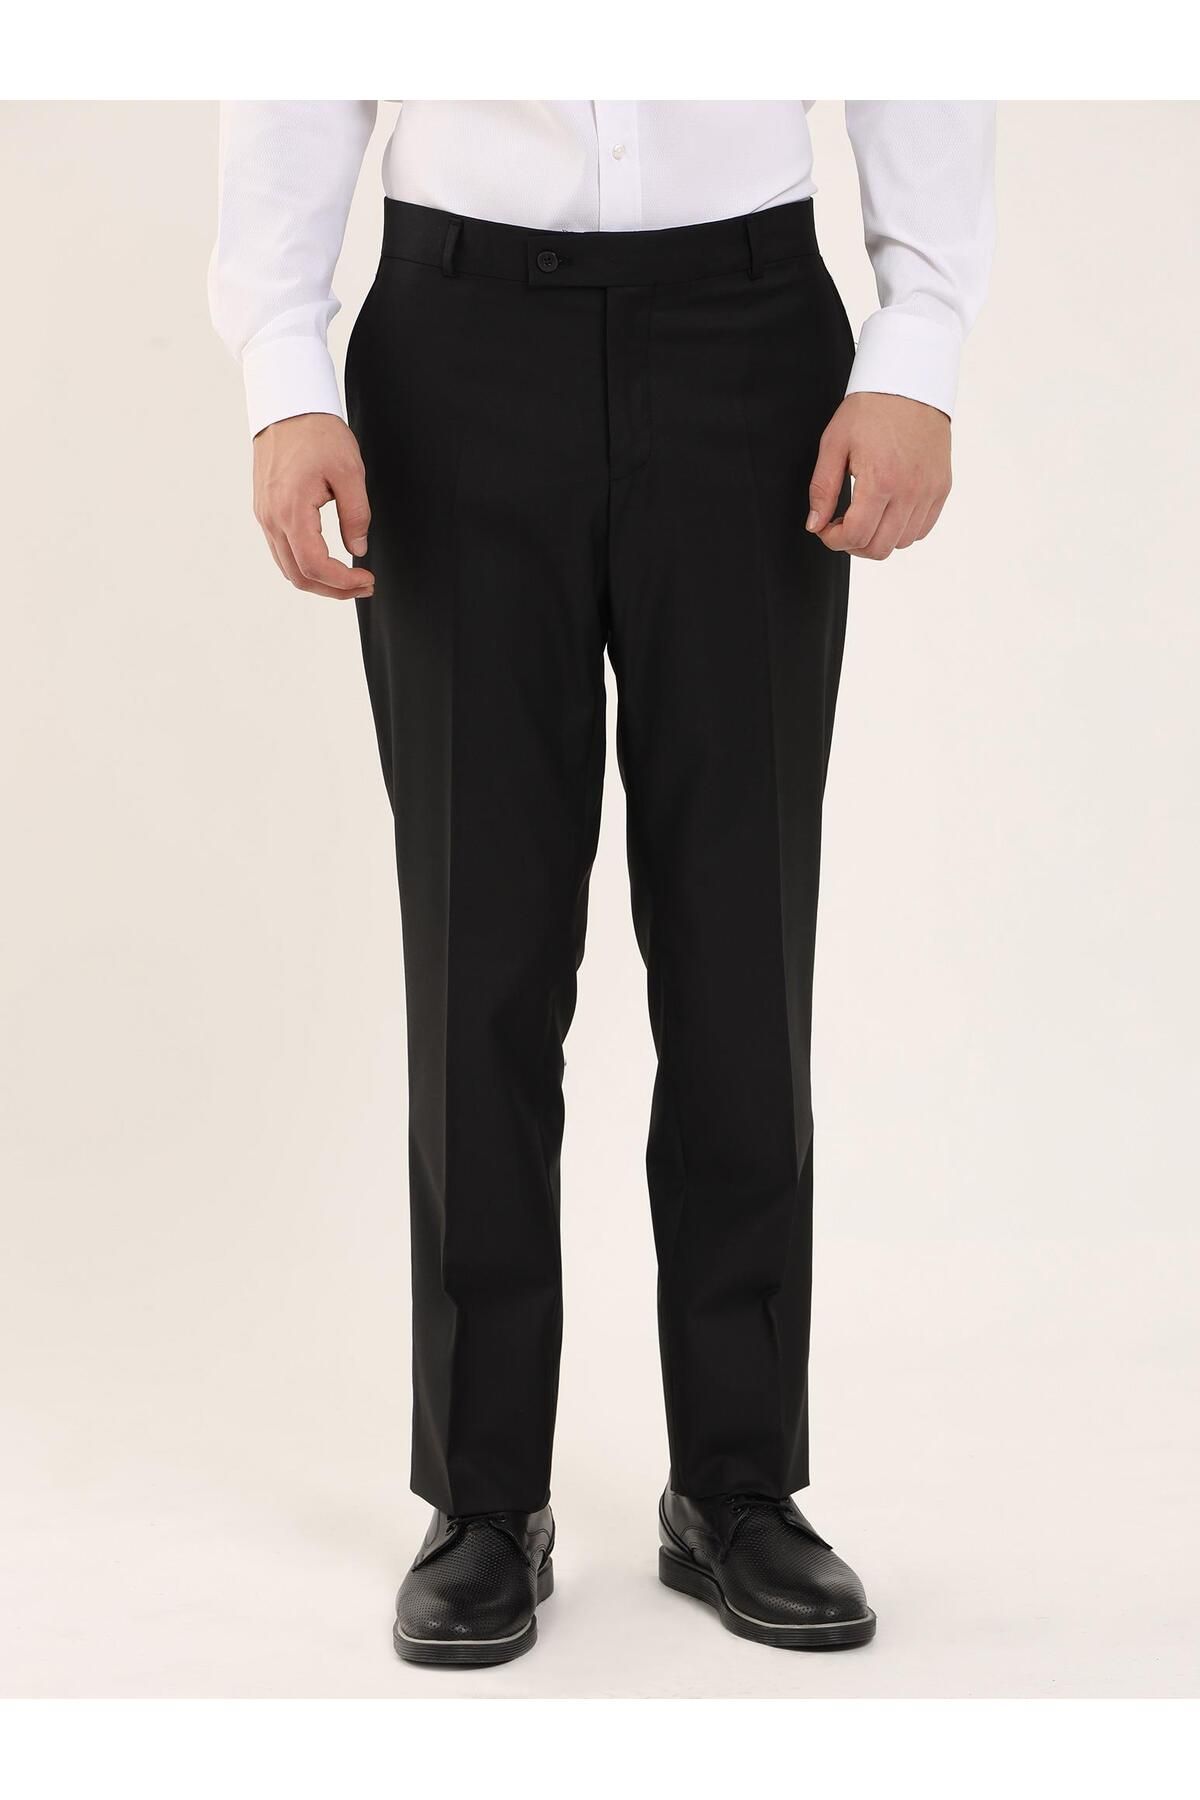 Dufy Siyah Erkek Regular Fit Düz Klasik Pantolon - 96875